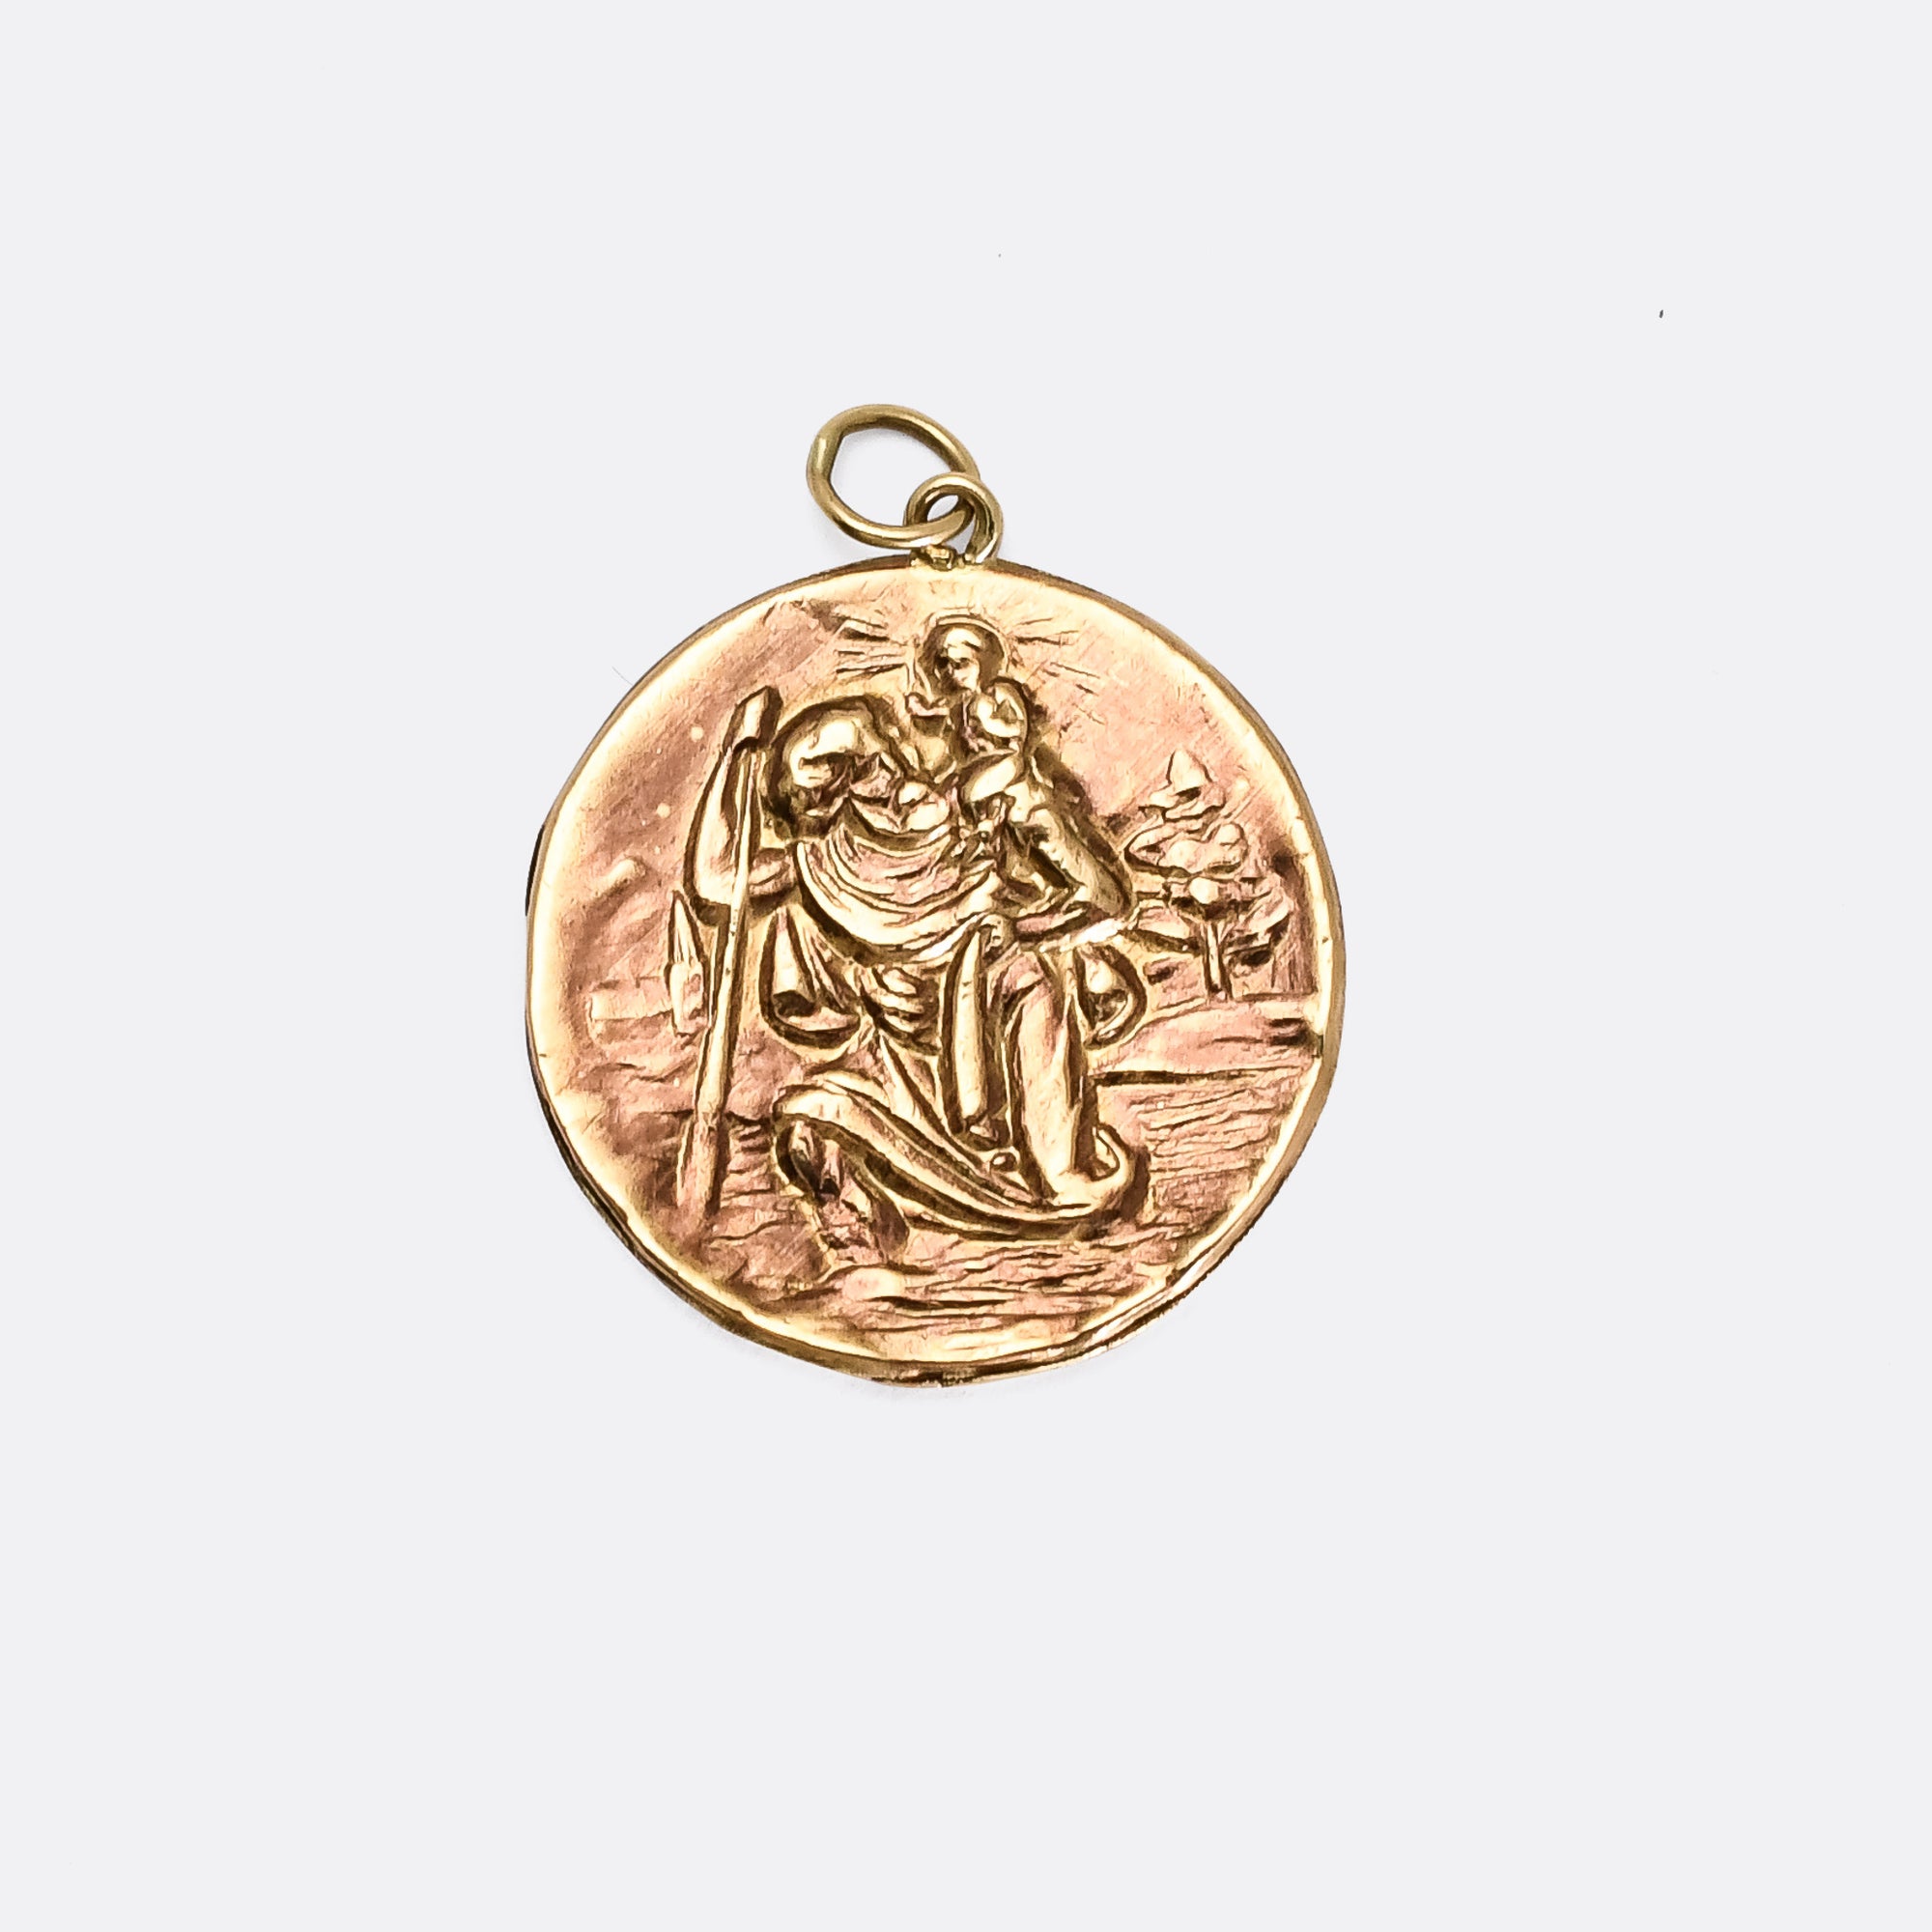 Alana Maria Jewellery Necklace - St Christopher 1.0